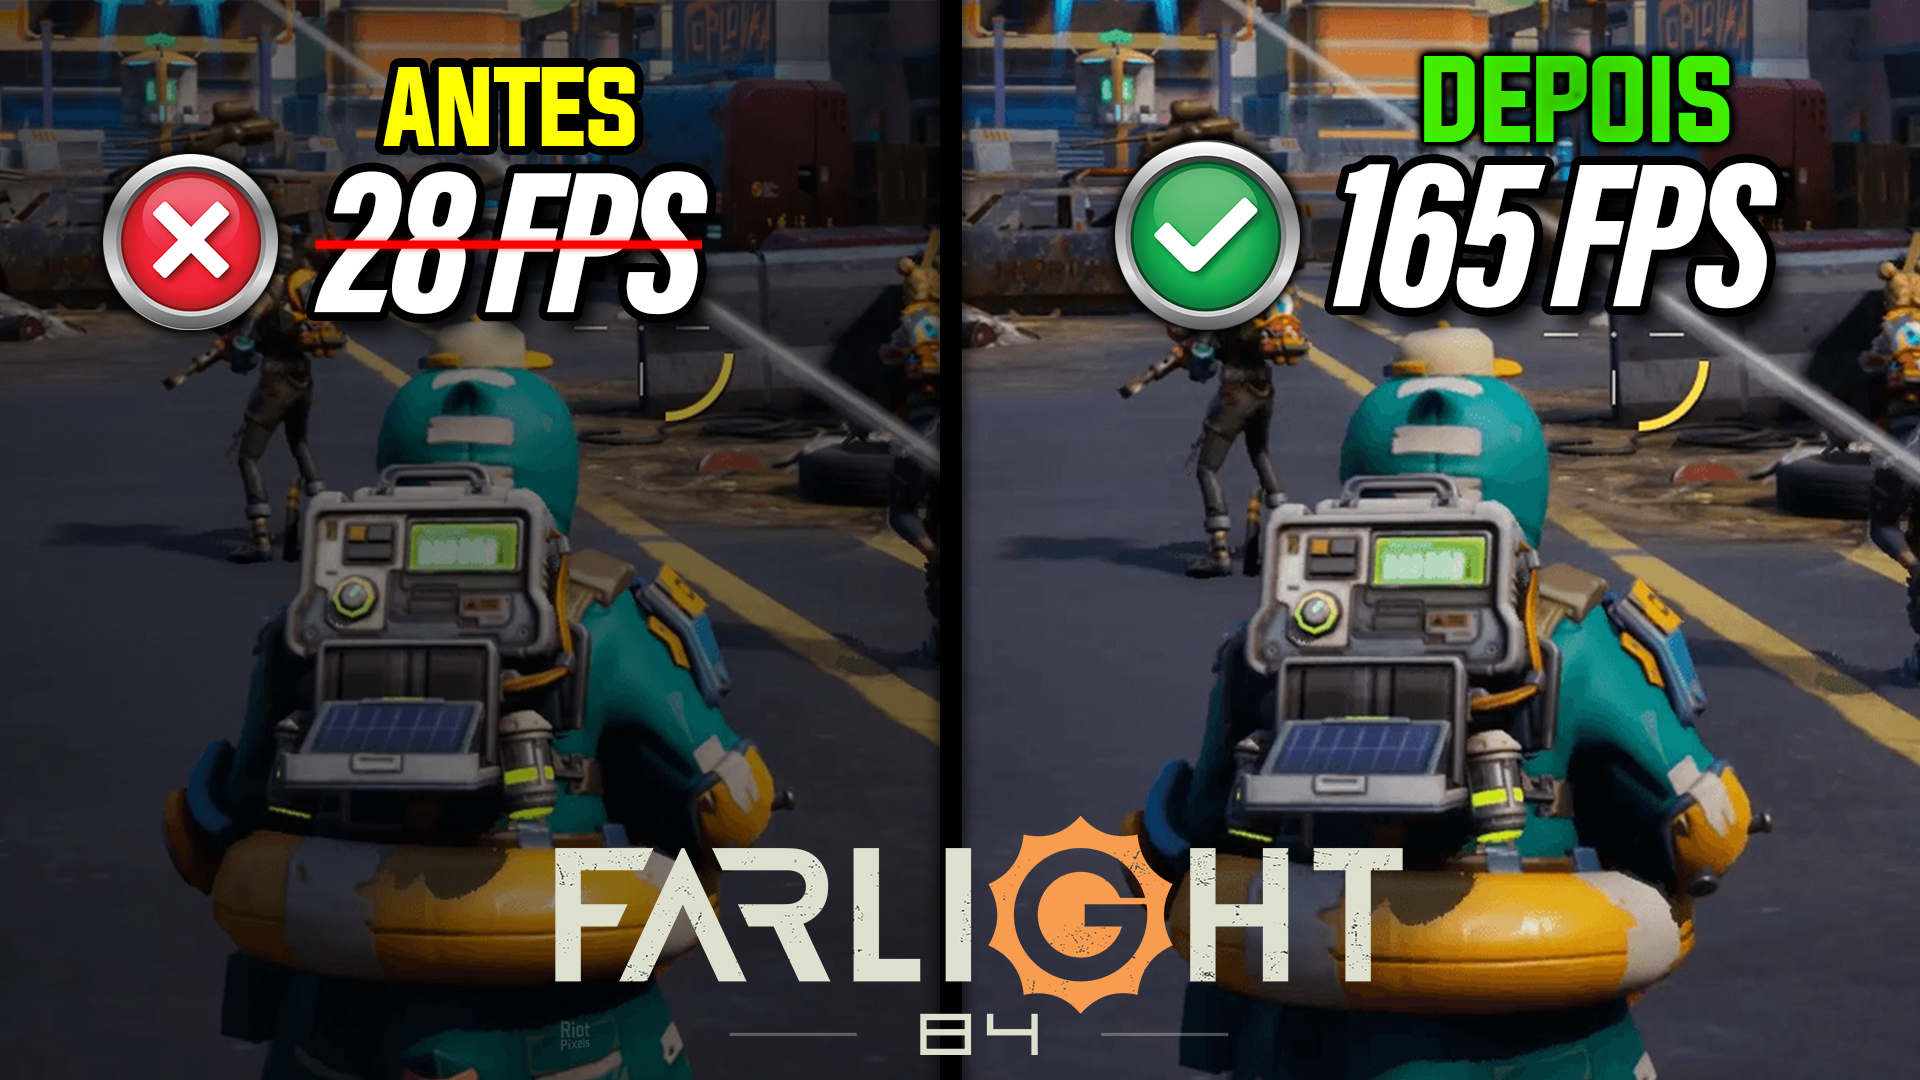 Farlight 84: requisitos mínimos para rodar no PC